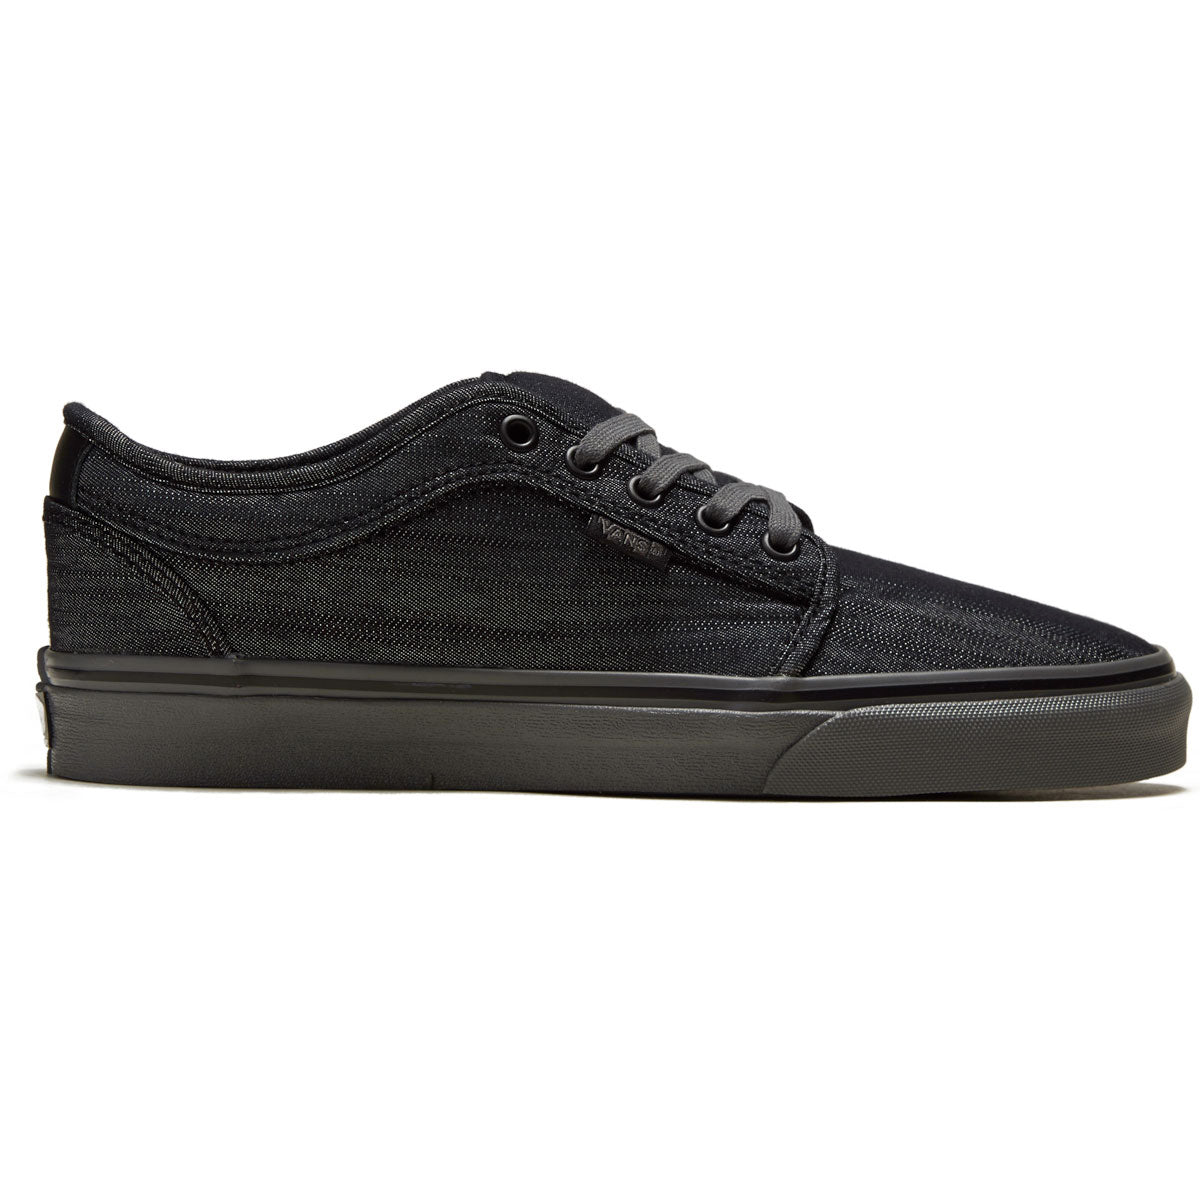 Vans Skate Chukka Low Shoes - Black/Grey/Denim image 1